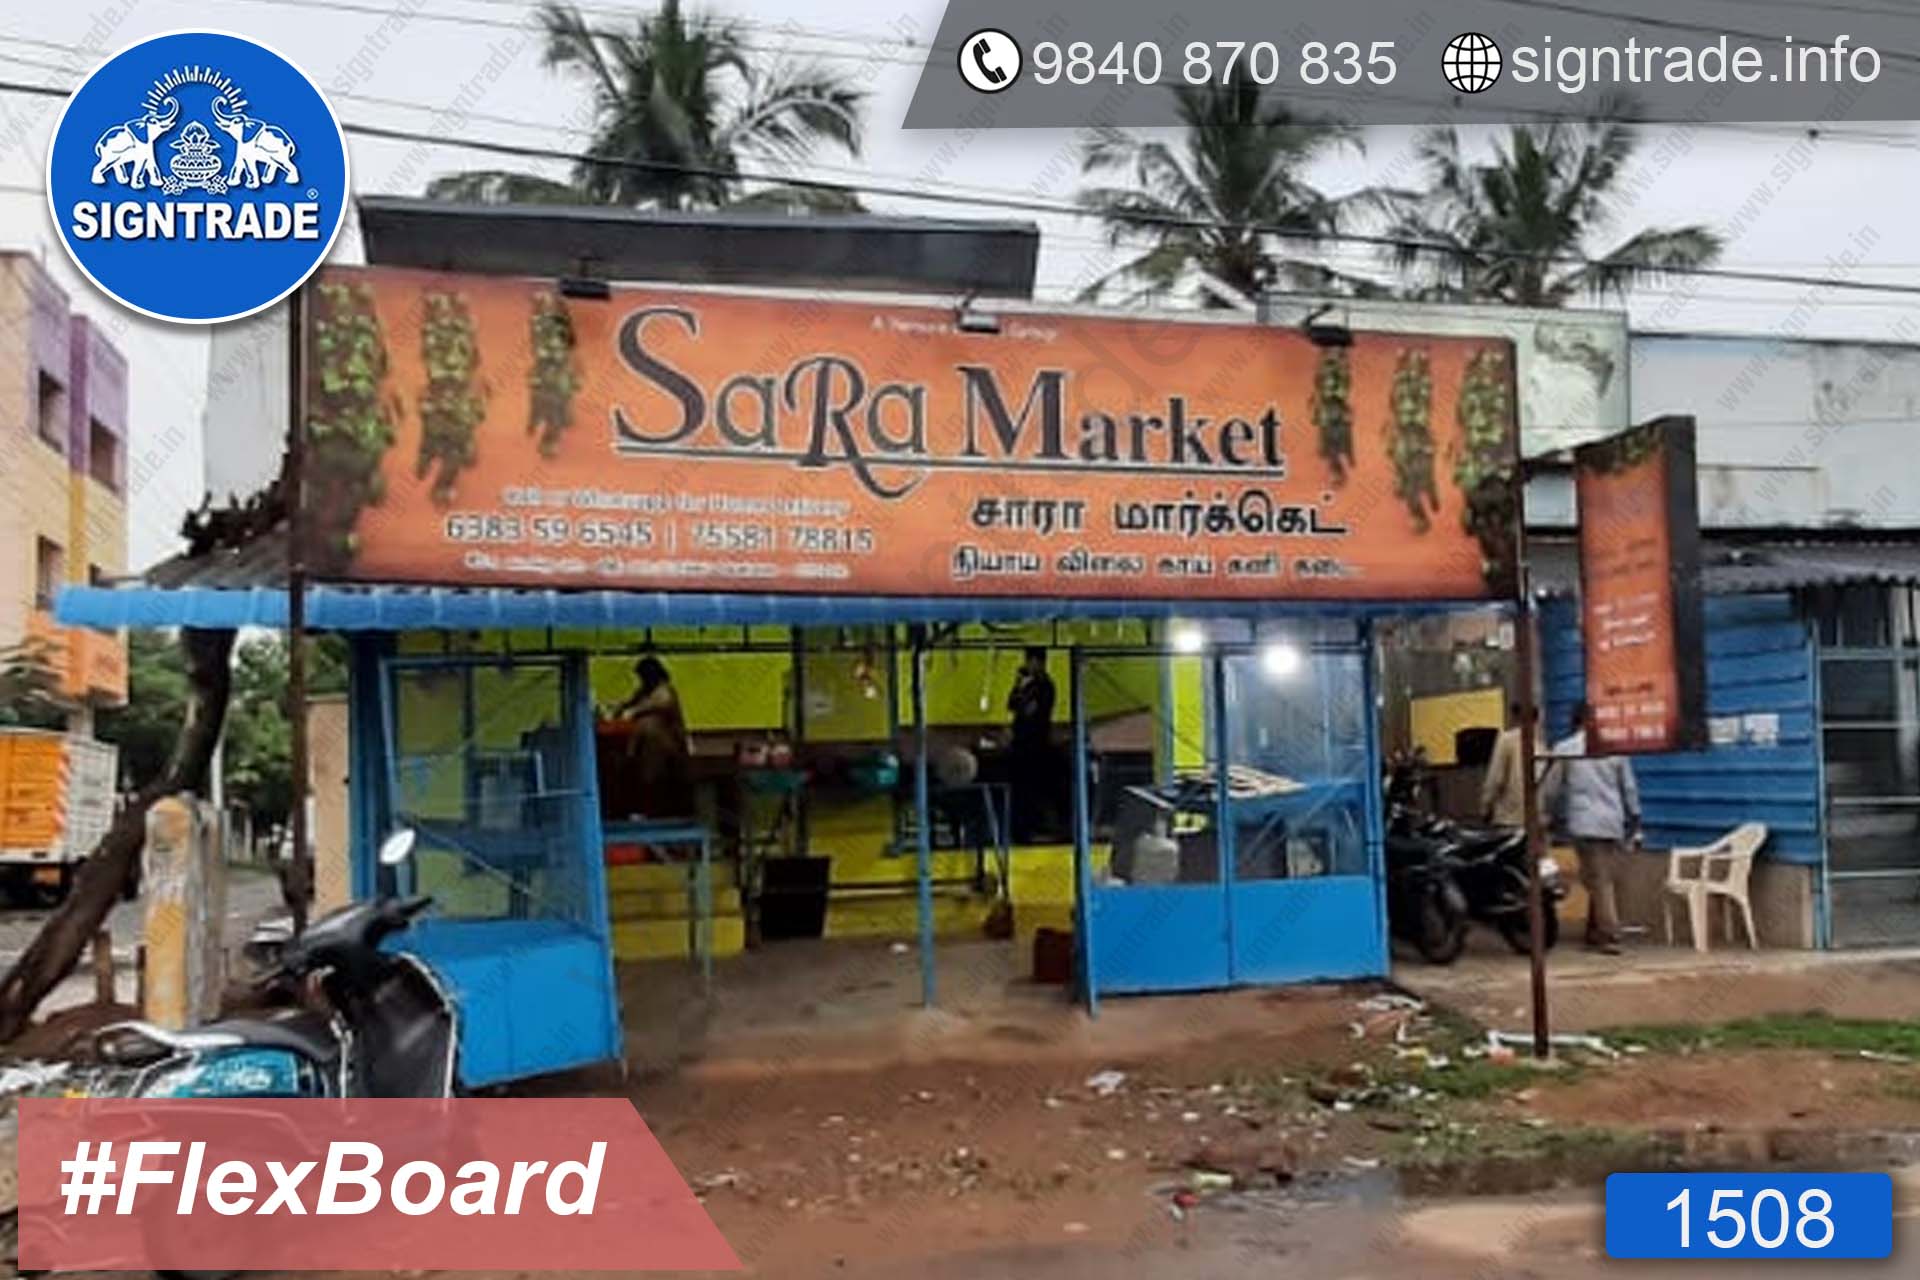 Sara Market, Chennai - SIGNTRADE - Digital Printing Service, FrontLit Flex Board Manufacturers in Chennai